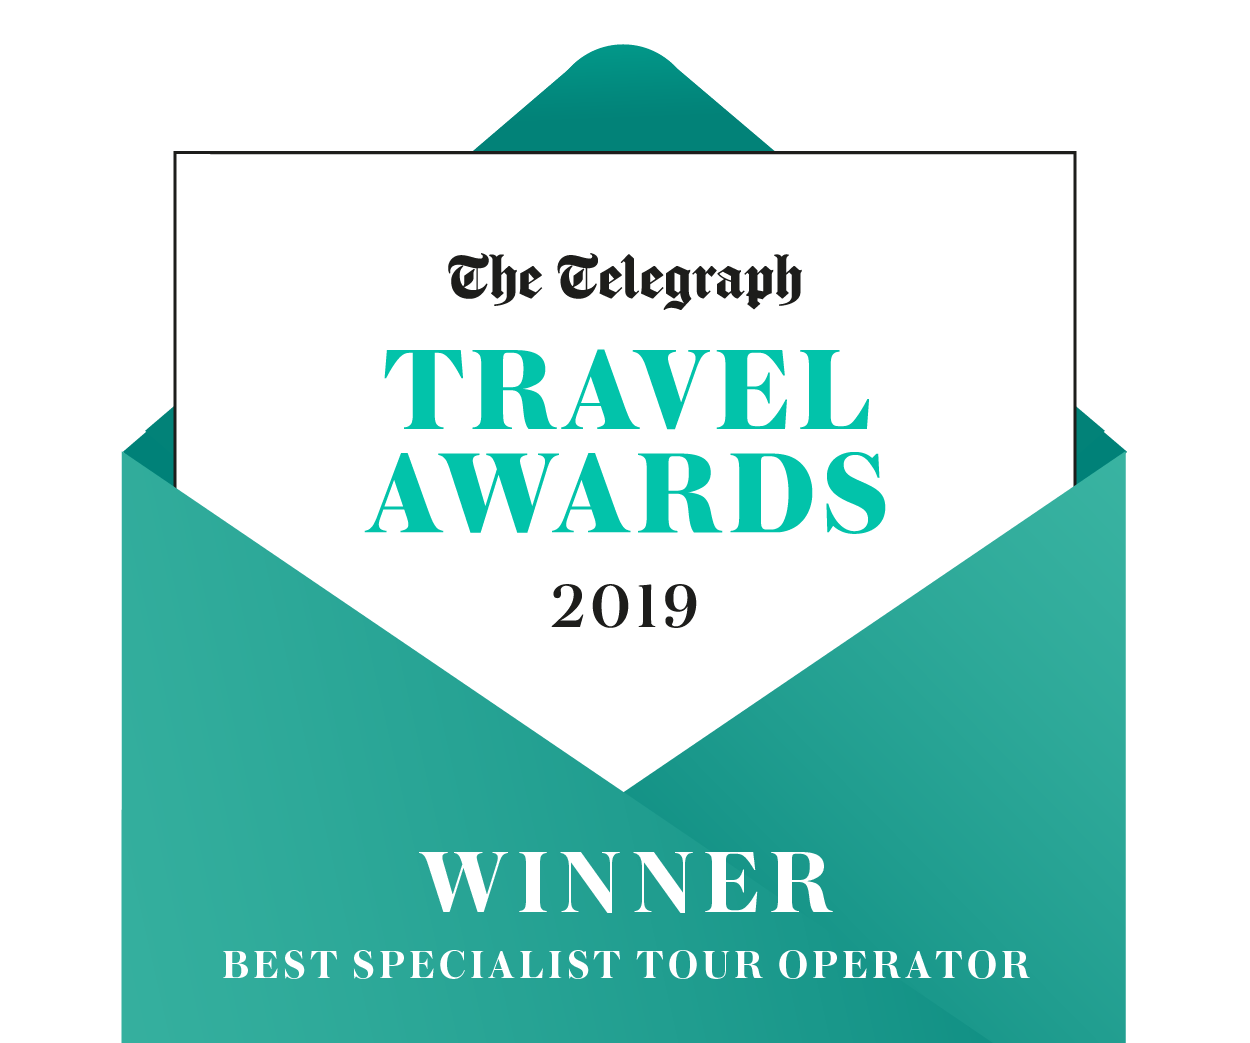 telegraph travel awards winners